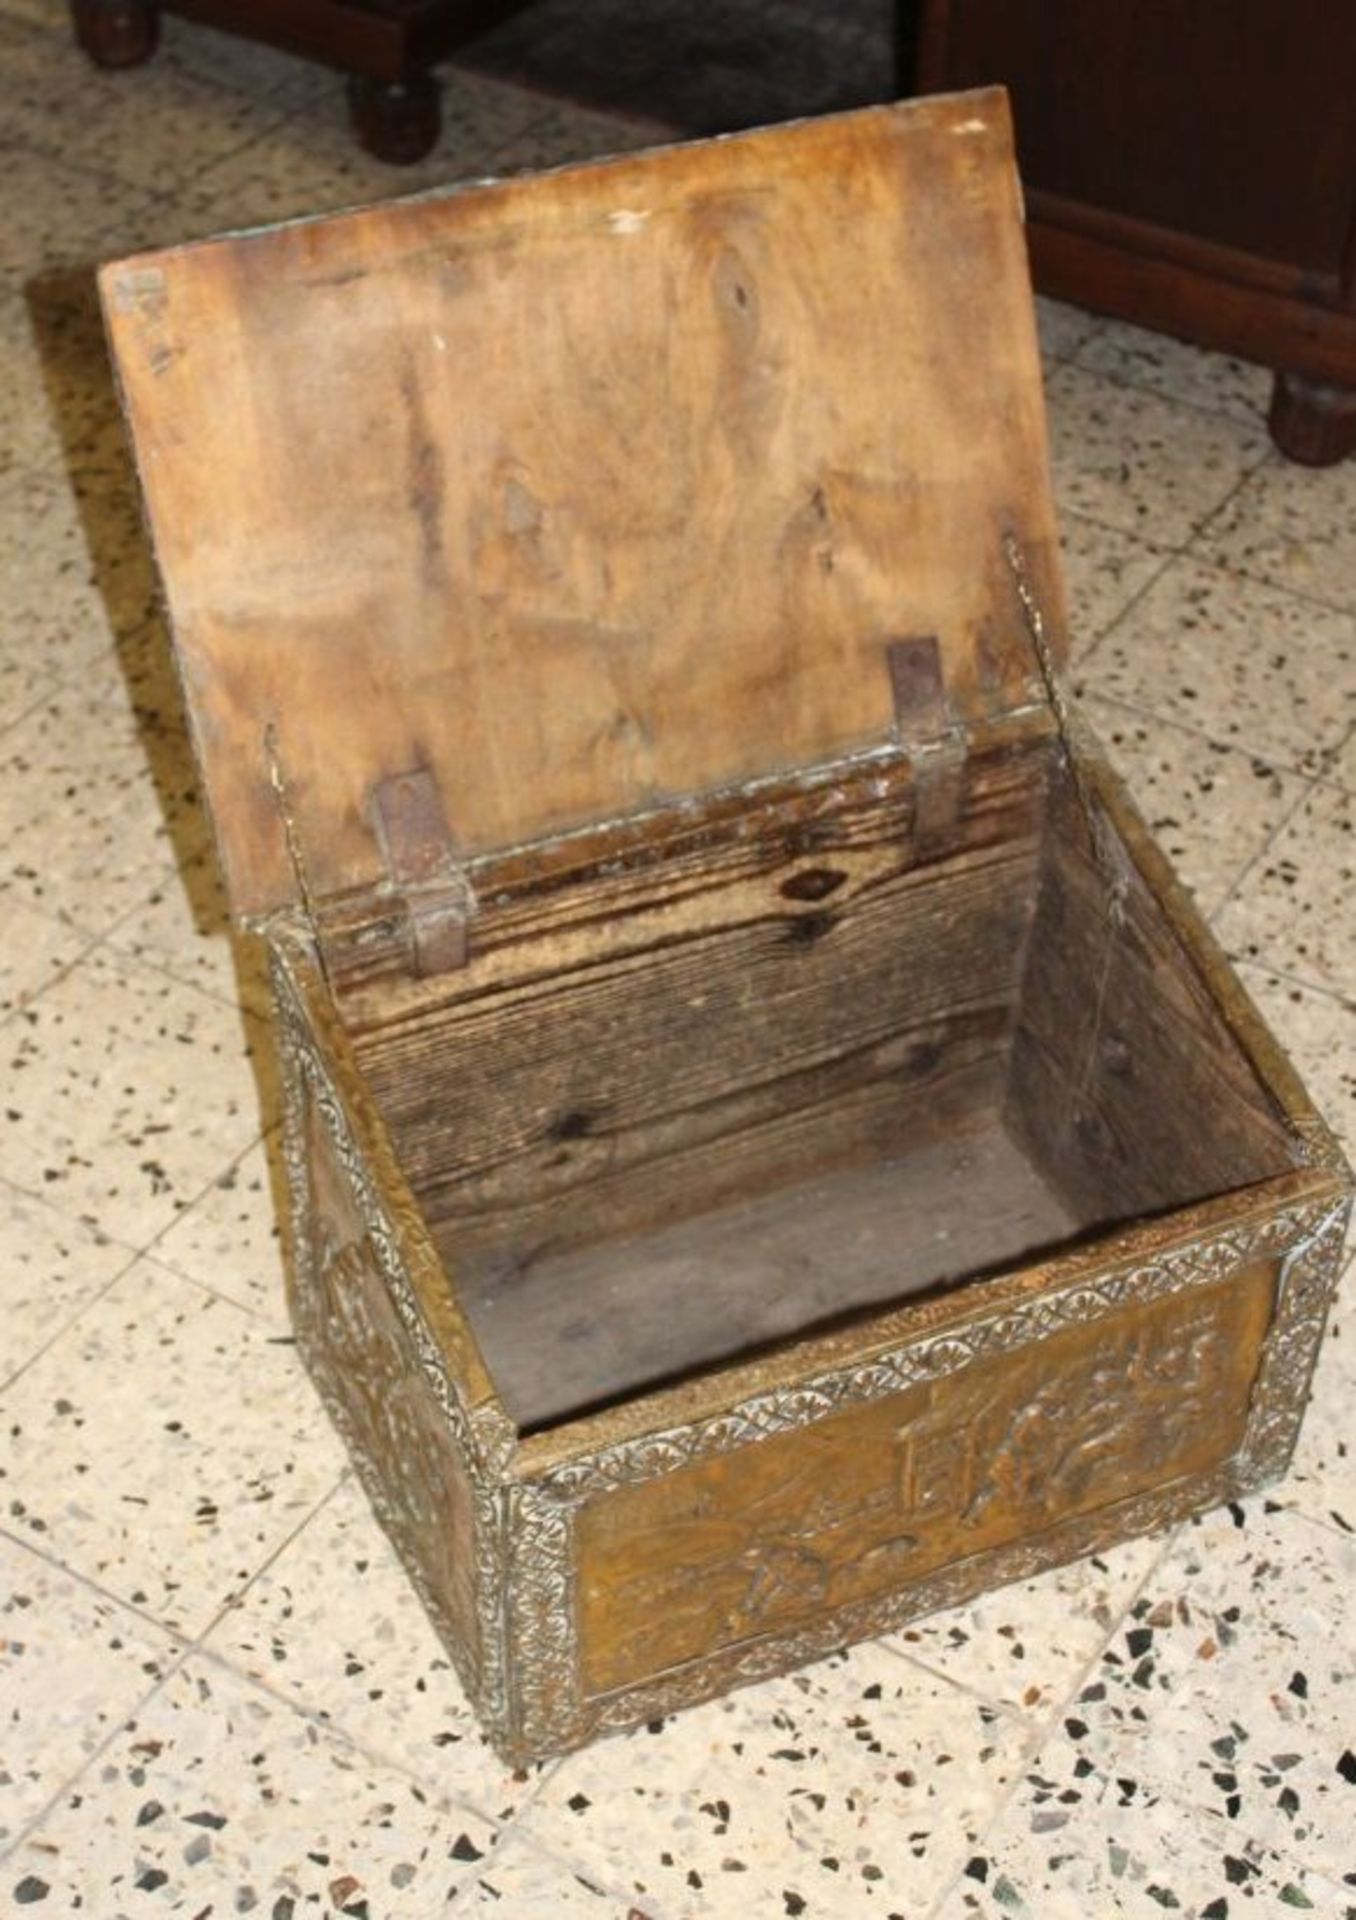 Kasten für Anfachholz / coal box, Messing über Holz, 1. H. 20. Jhd., England, H-35cm B-49cm T-34cm - Image 5 of 5